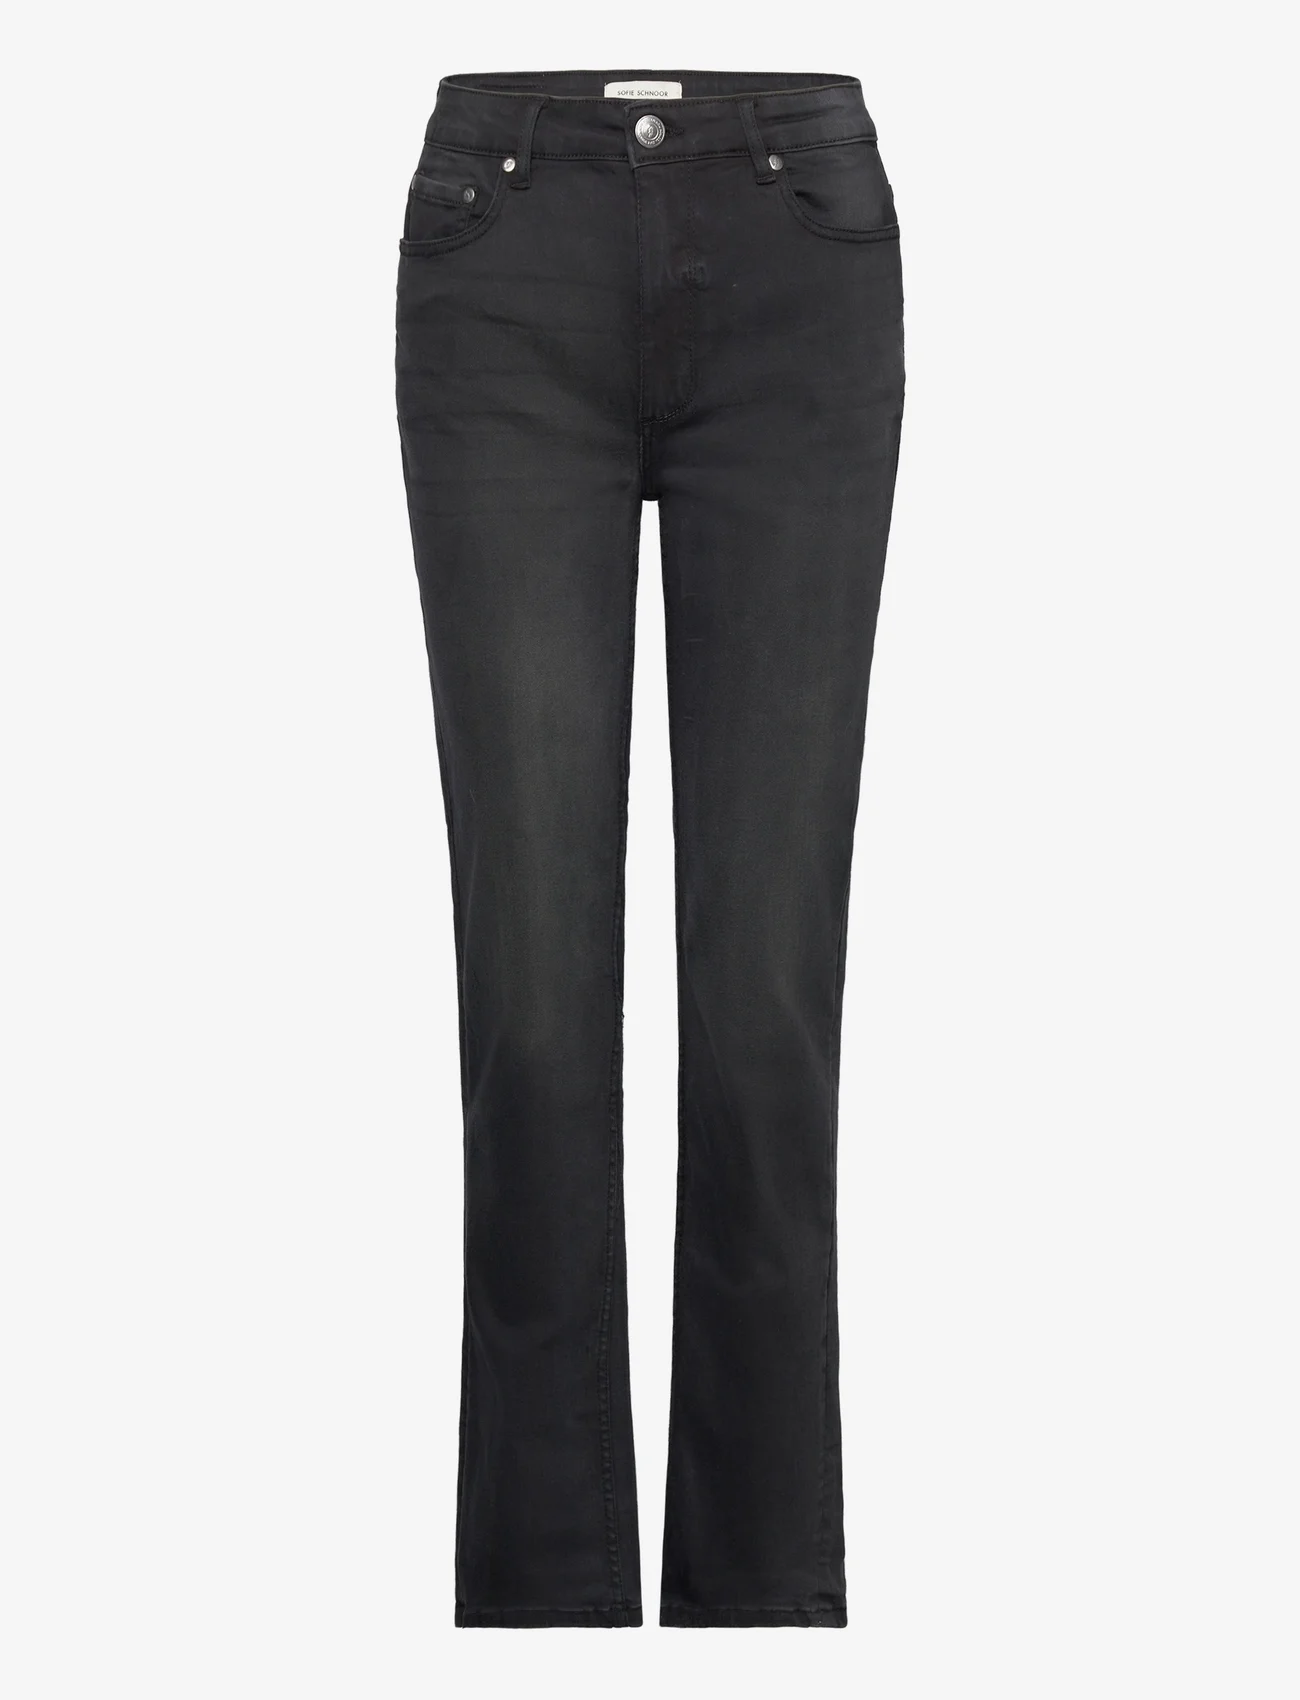 Sofie Schnoor - Jeans - flared jeans - black - 0